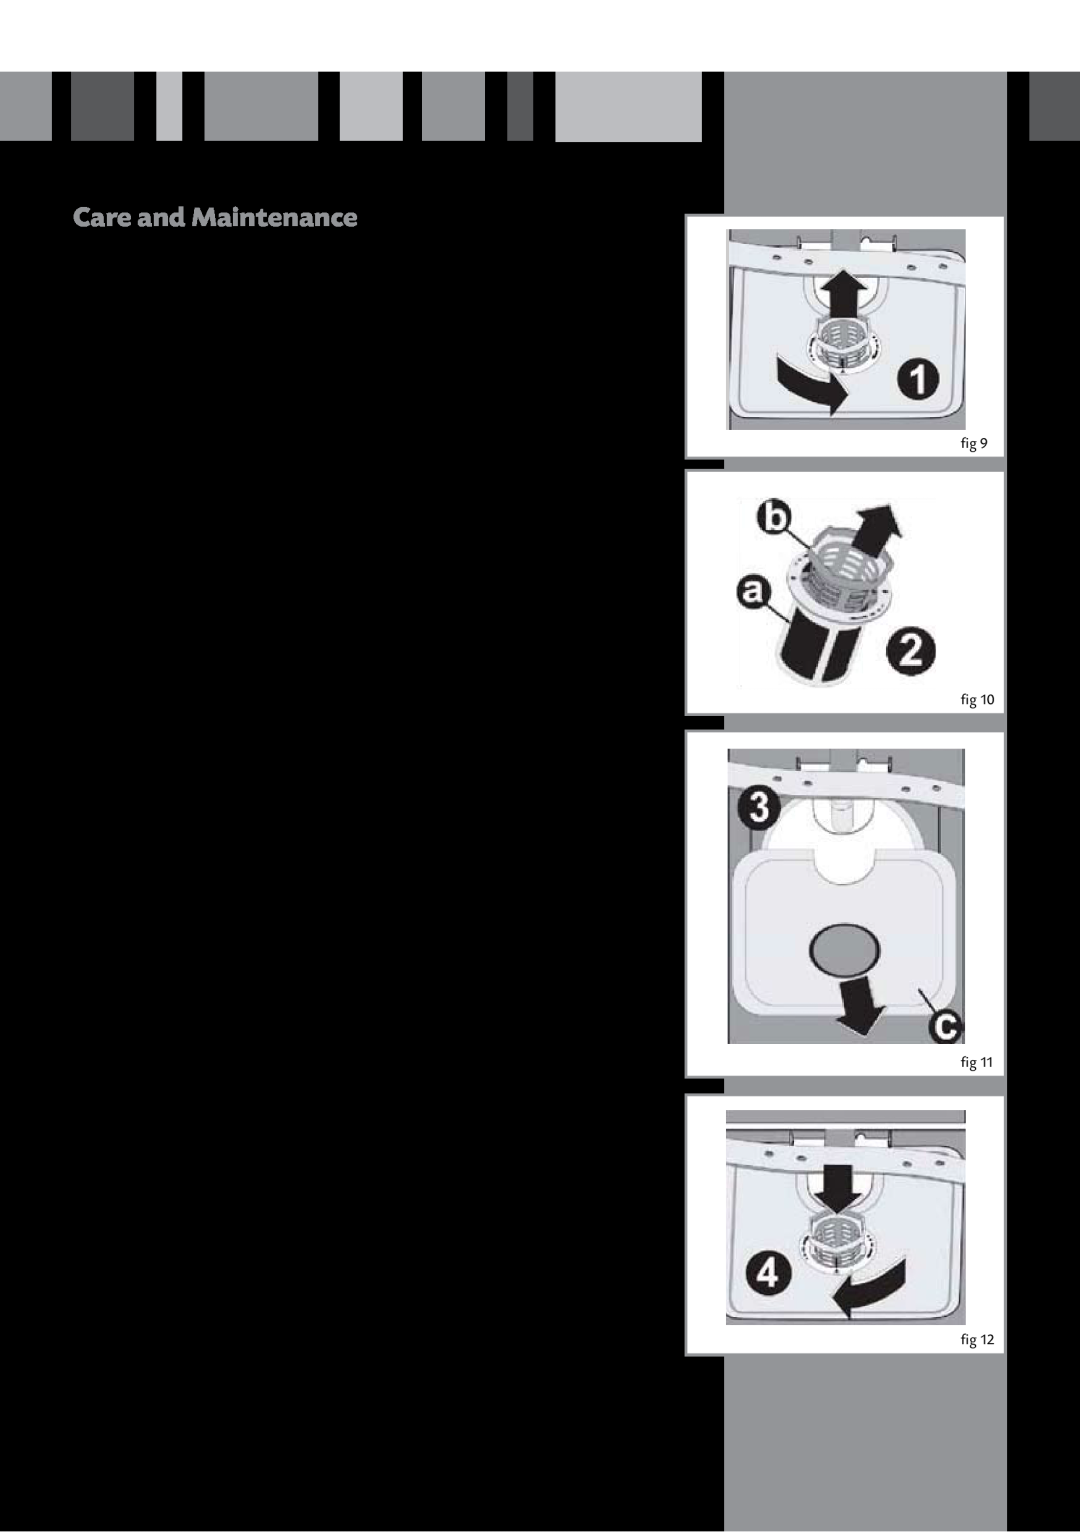 CDA WF140 manual Care and Maintenance, Door seals, Filters, Spray arms, Dishwasher interior 